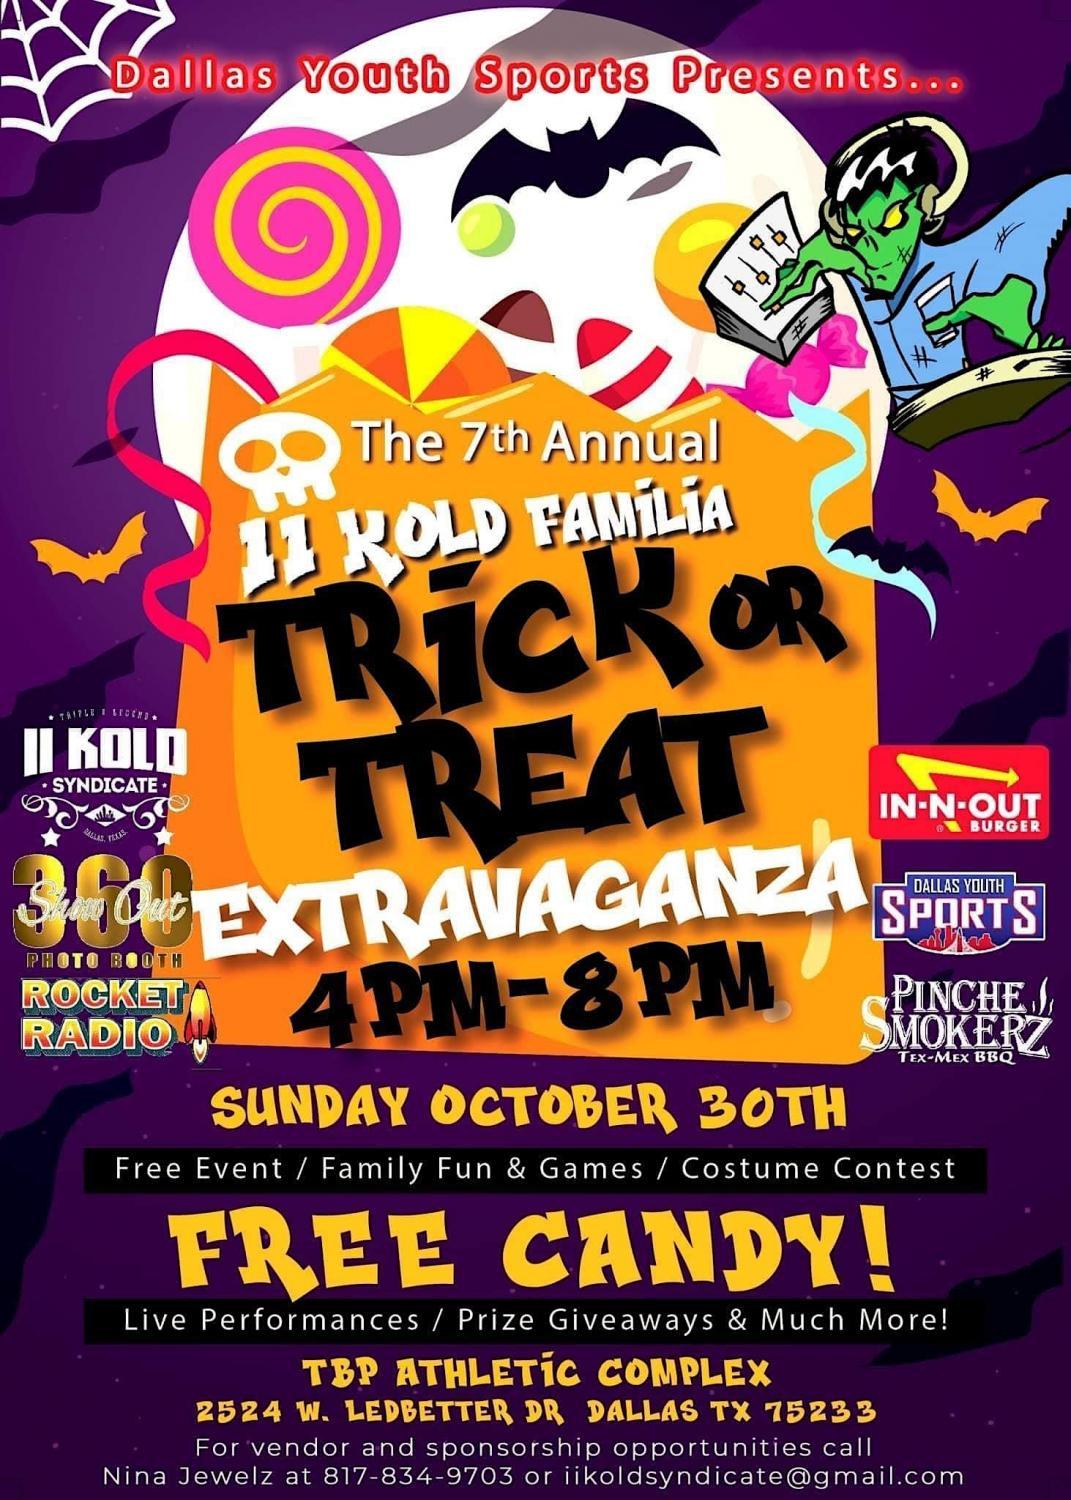 Dallas Youth Sports Presents Ii Kold Familia Trick or Treat Exrtravaganza
Sun Oct 30, 4:00 PM - Sun Oct 30, 8:00 PM
in 9 days